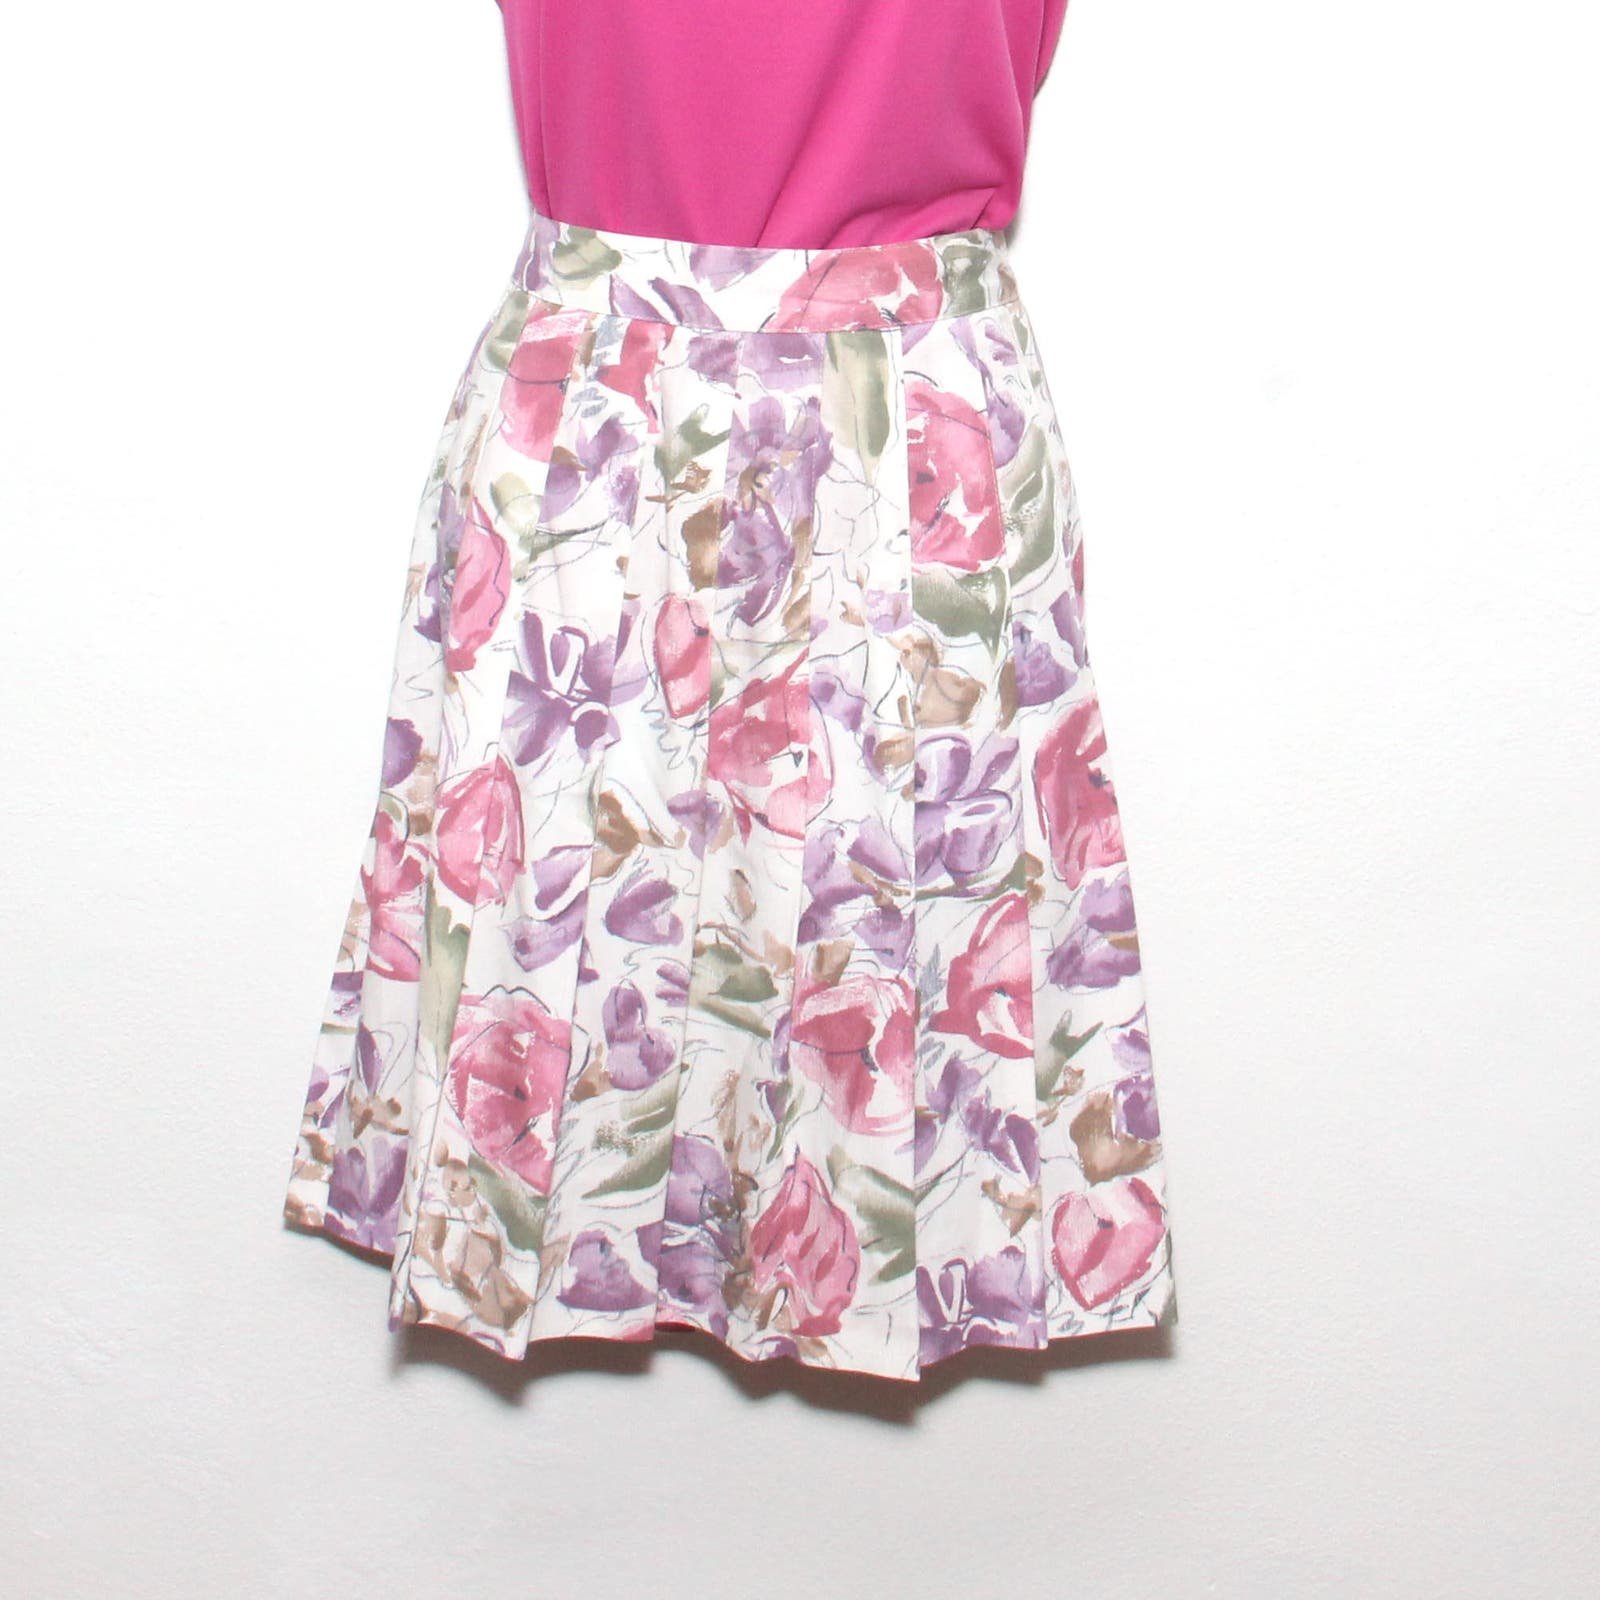 Simple Vintage Toni Garment Floral Pleated Skirt Size 12 mhkr0ql6h hot sale